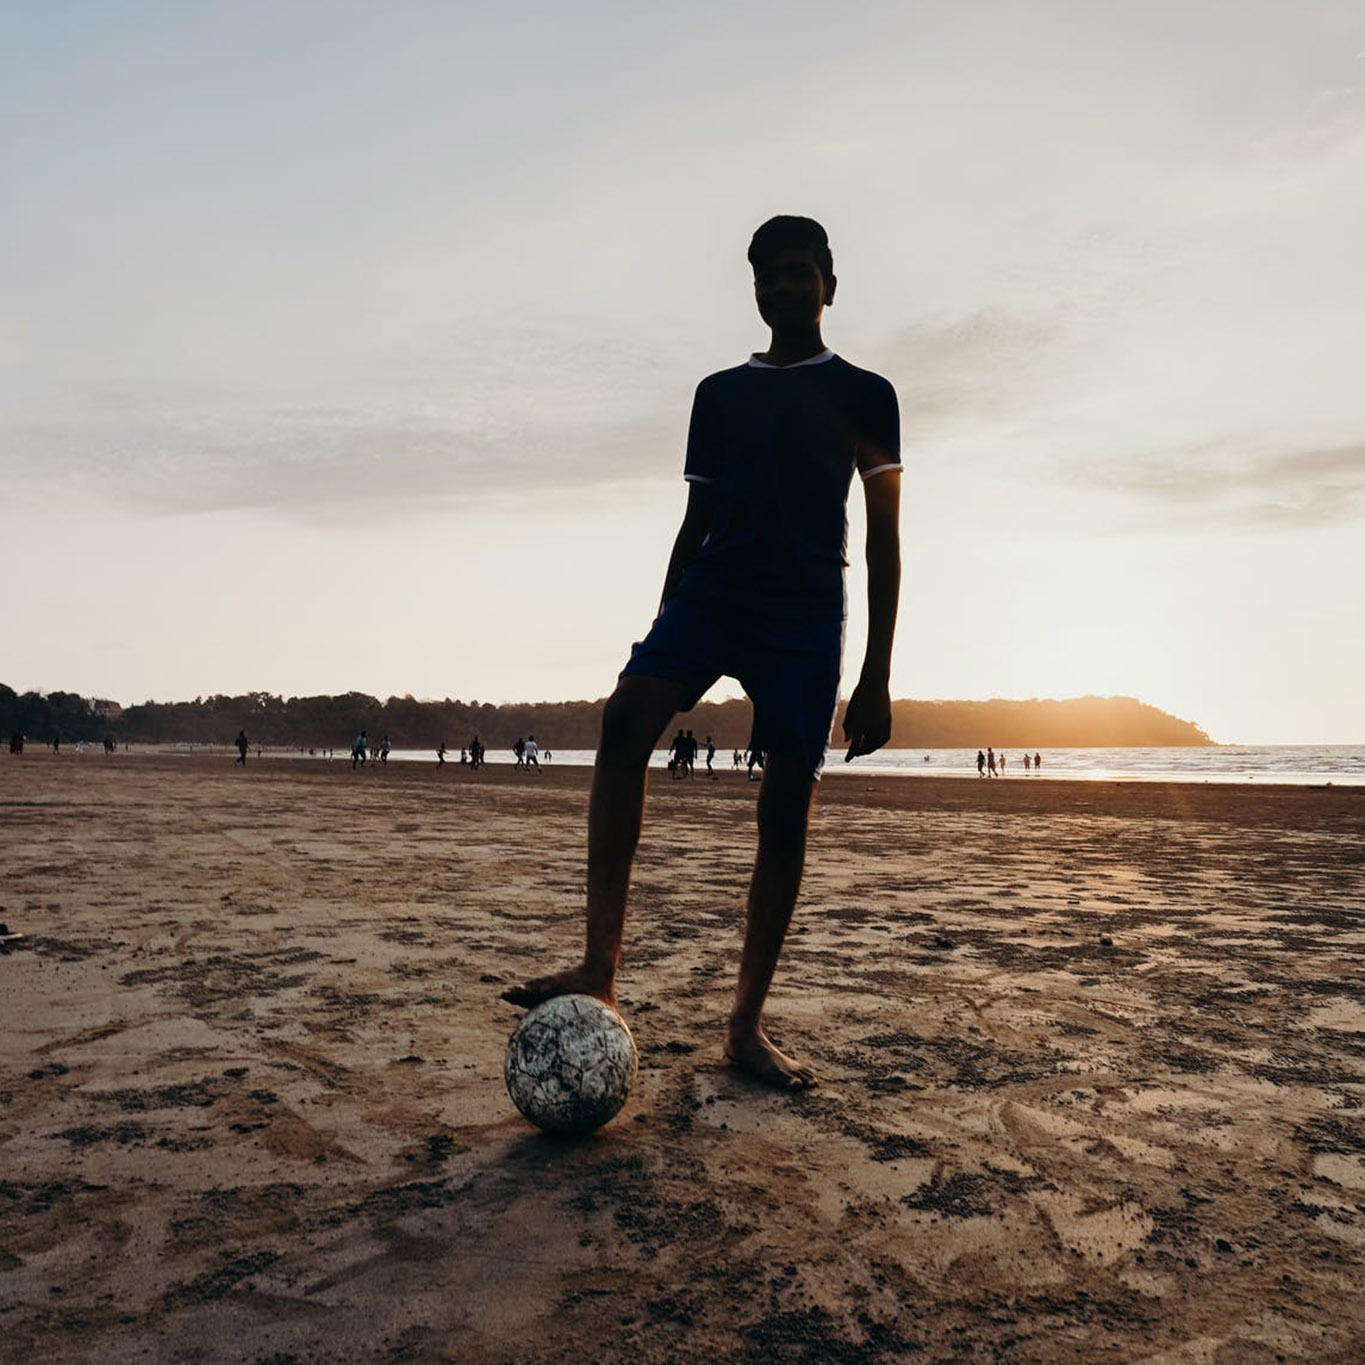 Boy with foot on soccer ball on beach